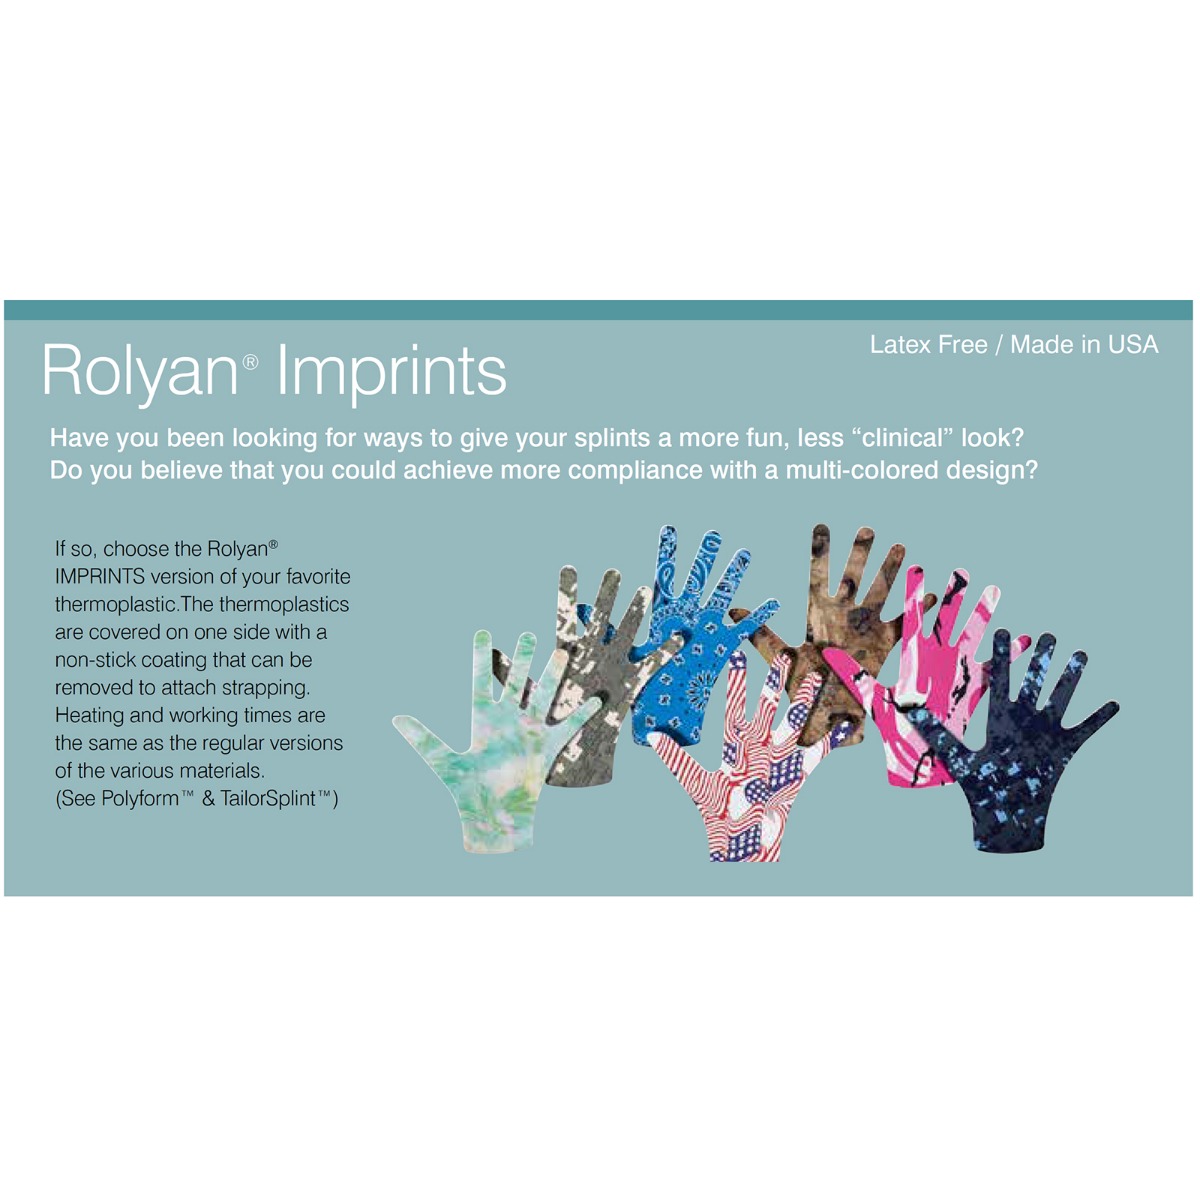 Rolyan Imprints